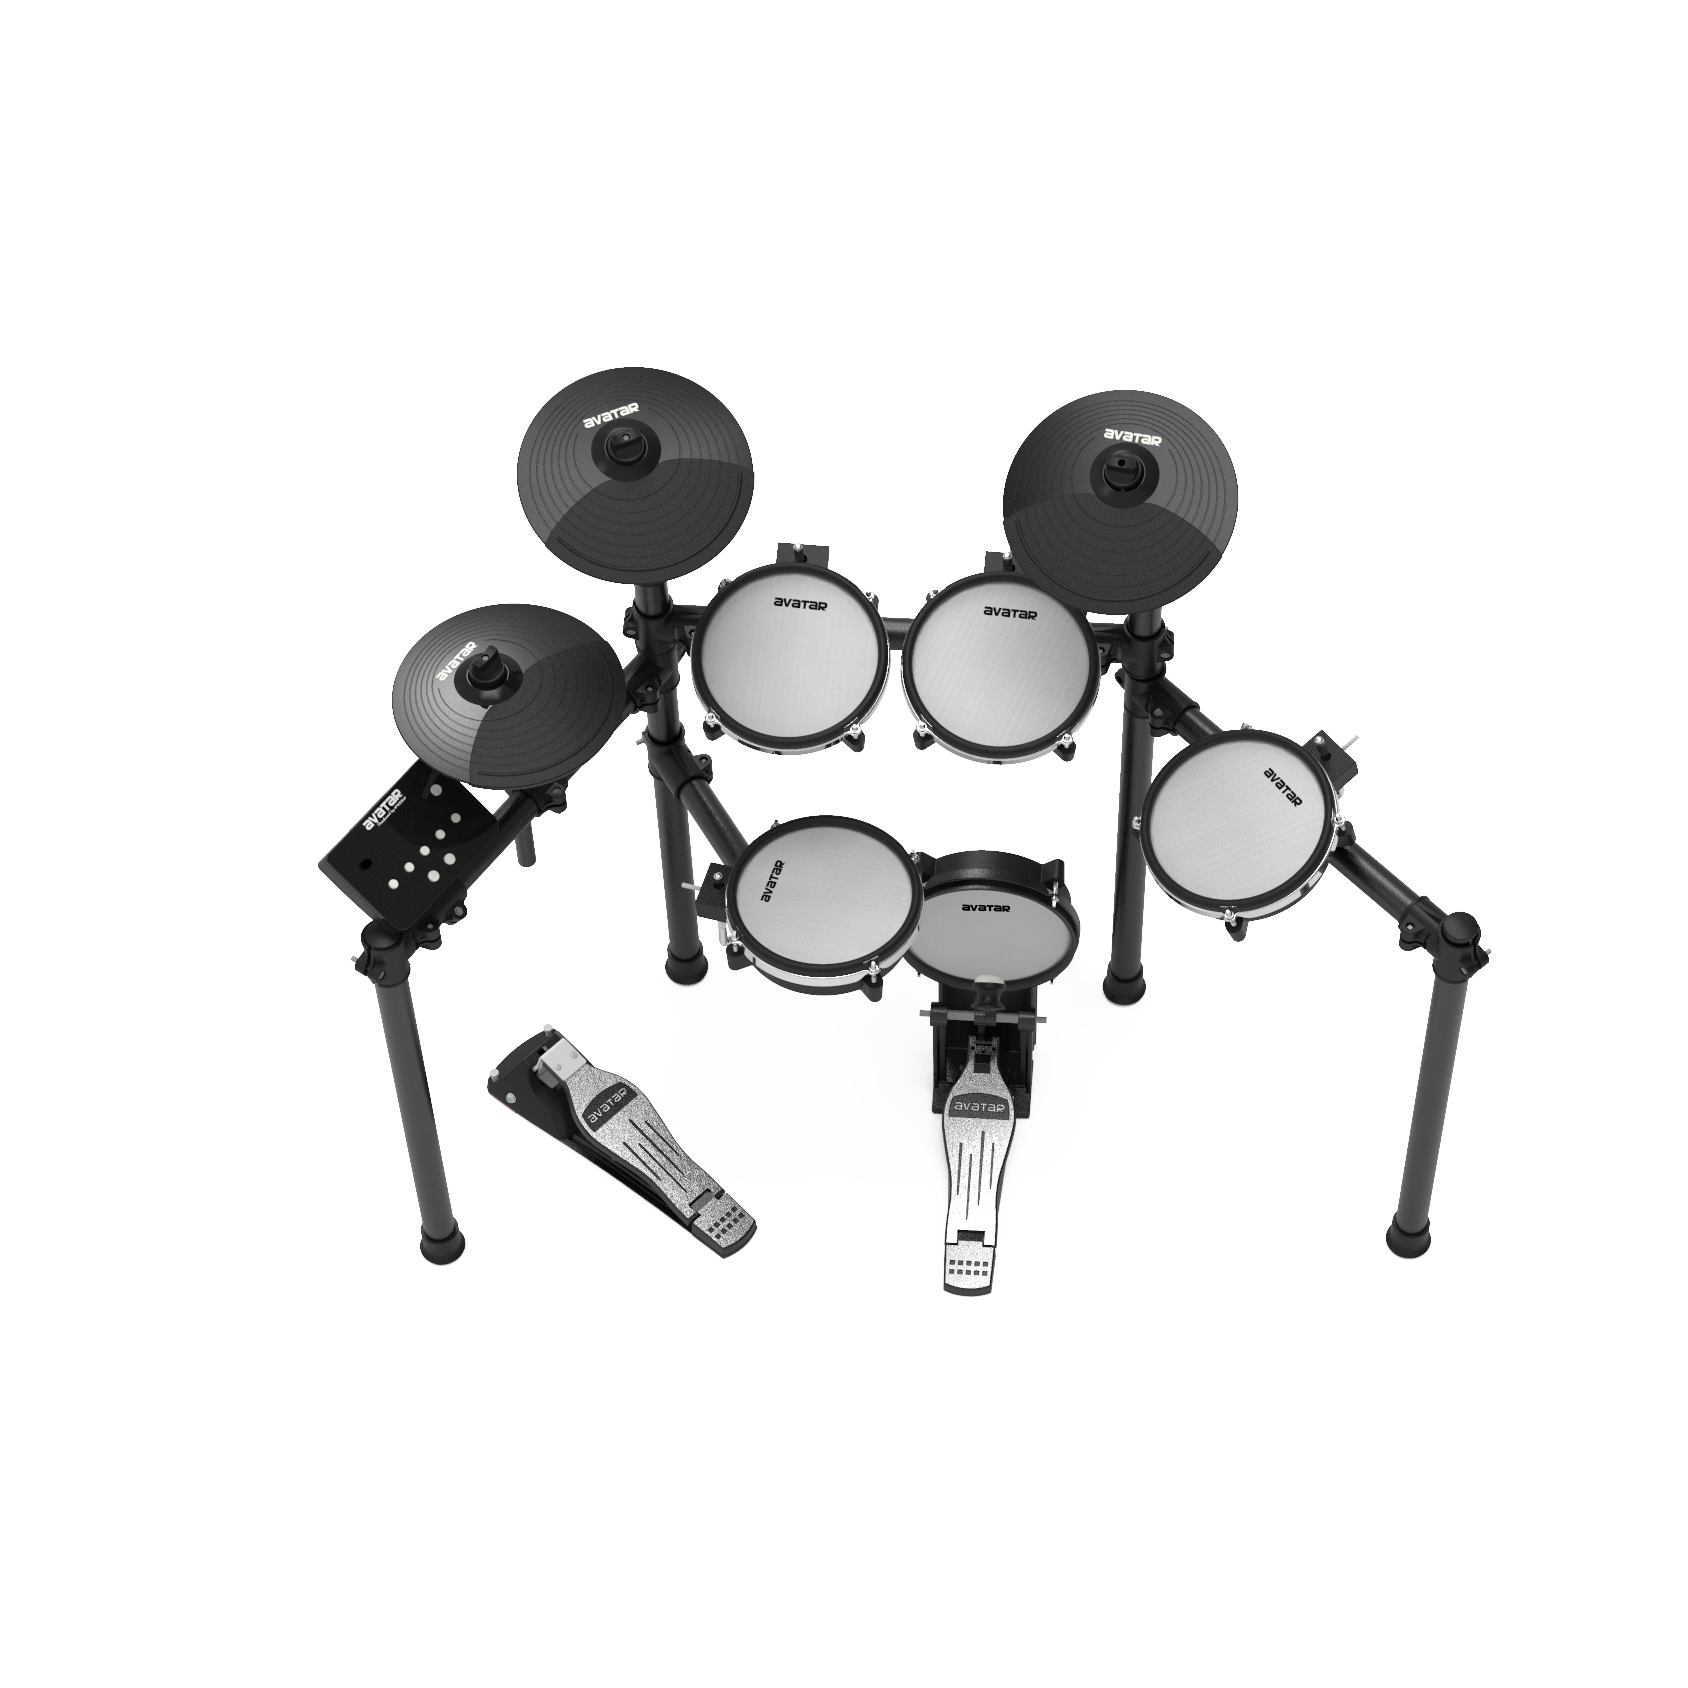 Avatar SD61-6 Digital Drum Mesh Head 8pcs (Drums Only)